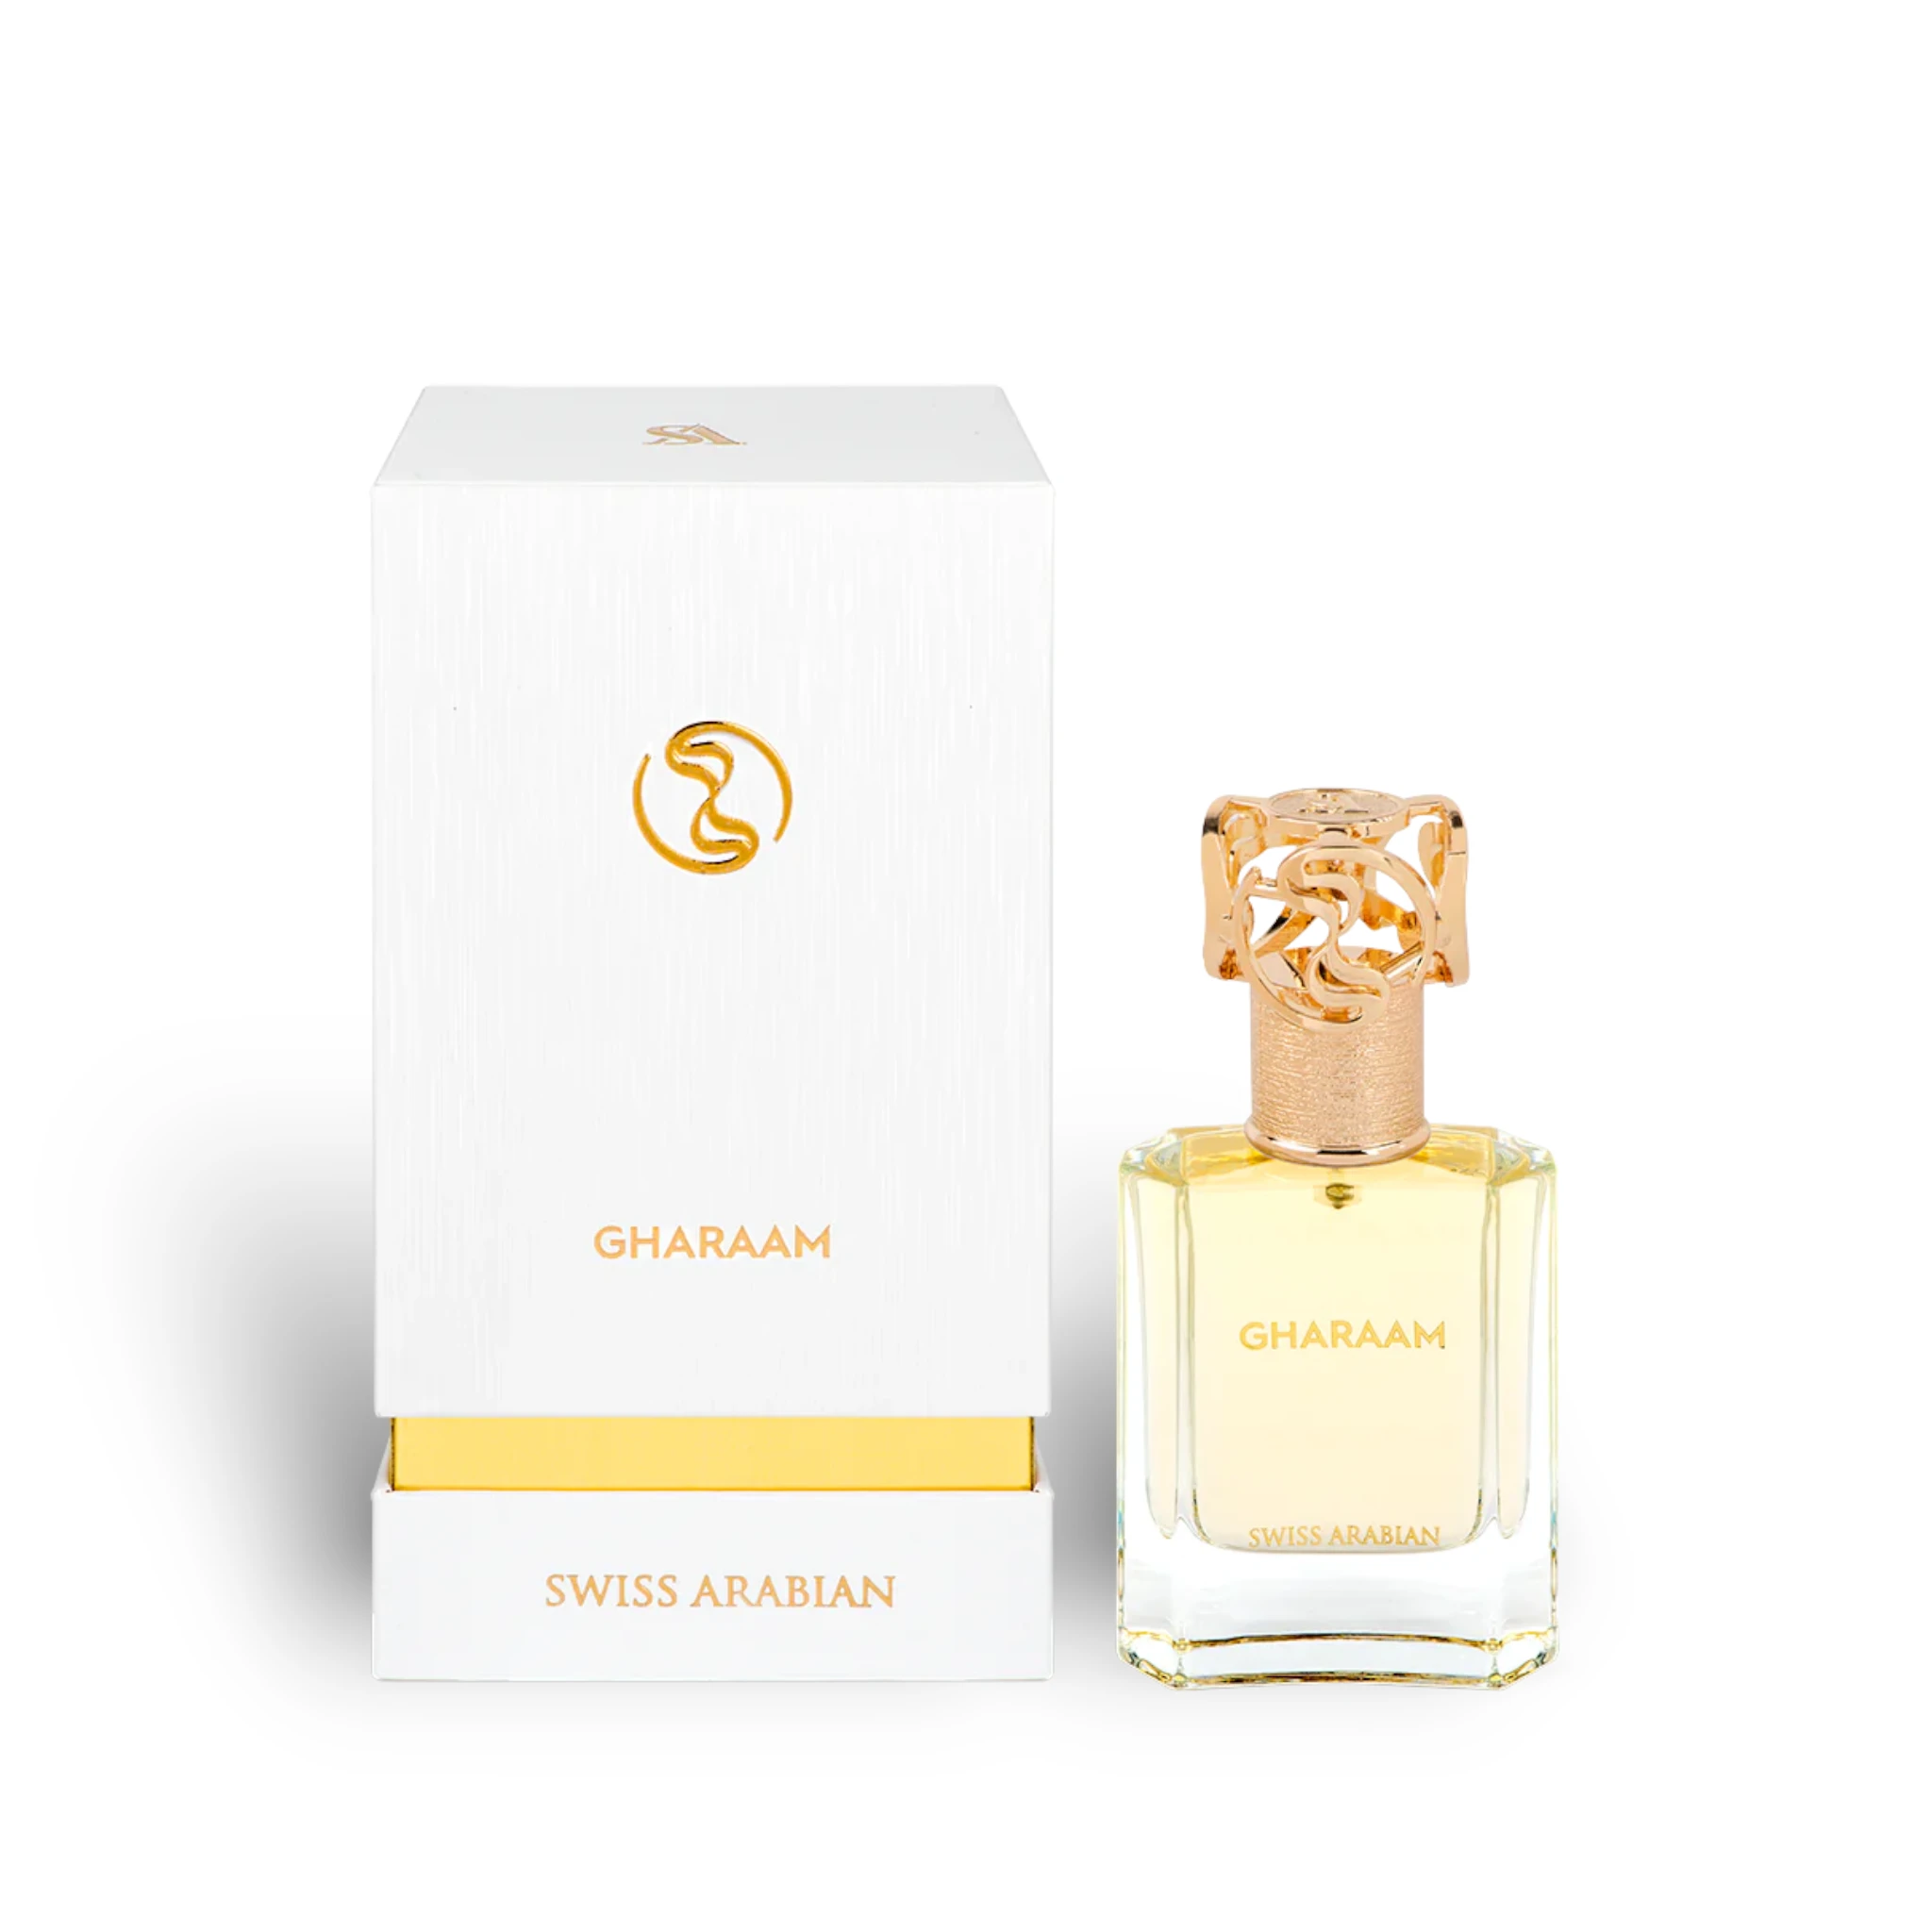 Gharaam Perfume Eau De Parfum 50Ml Edp By Swiss Arabian